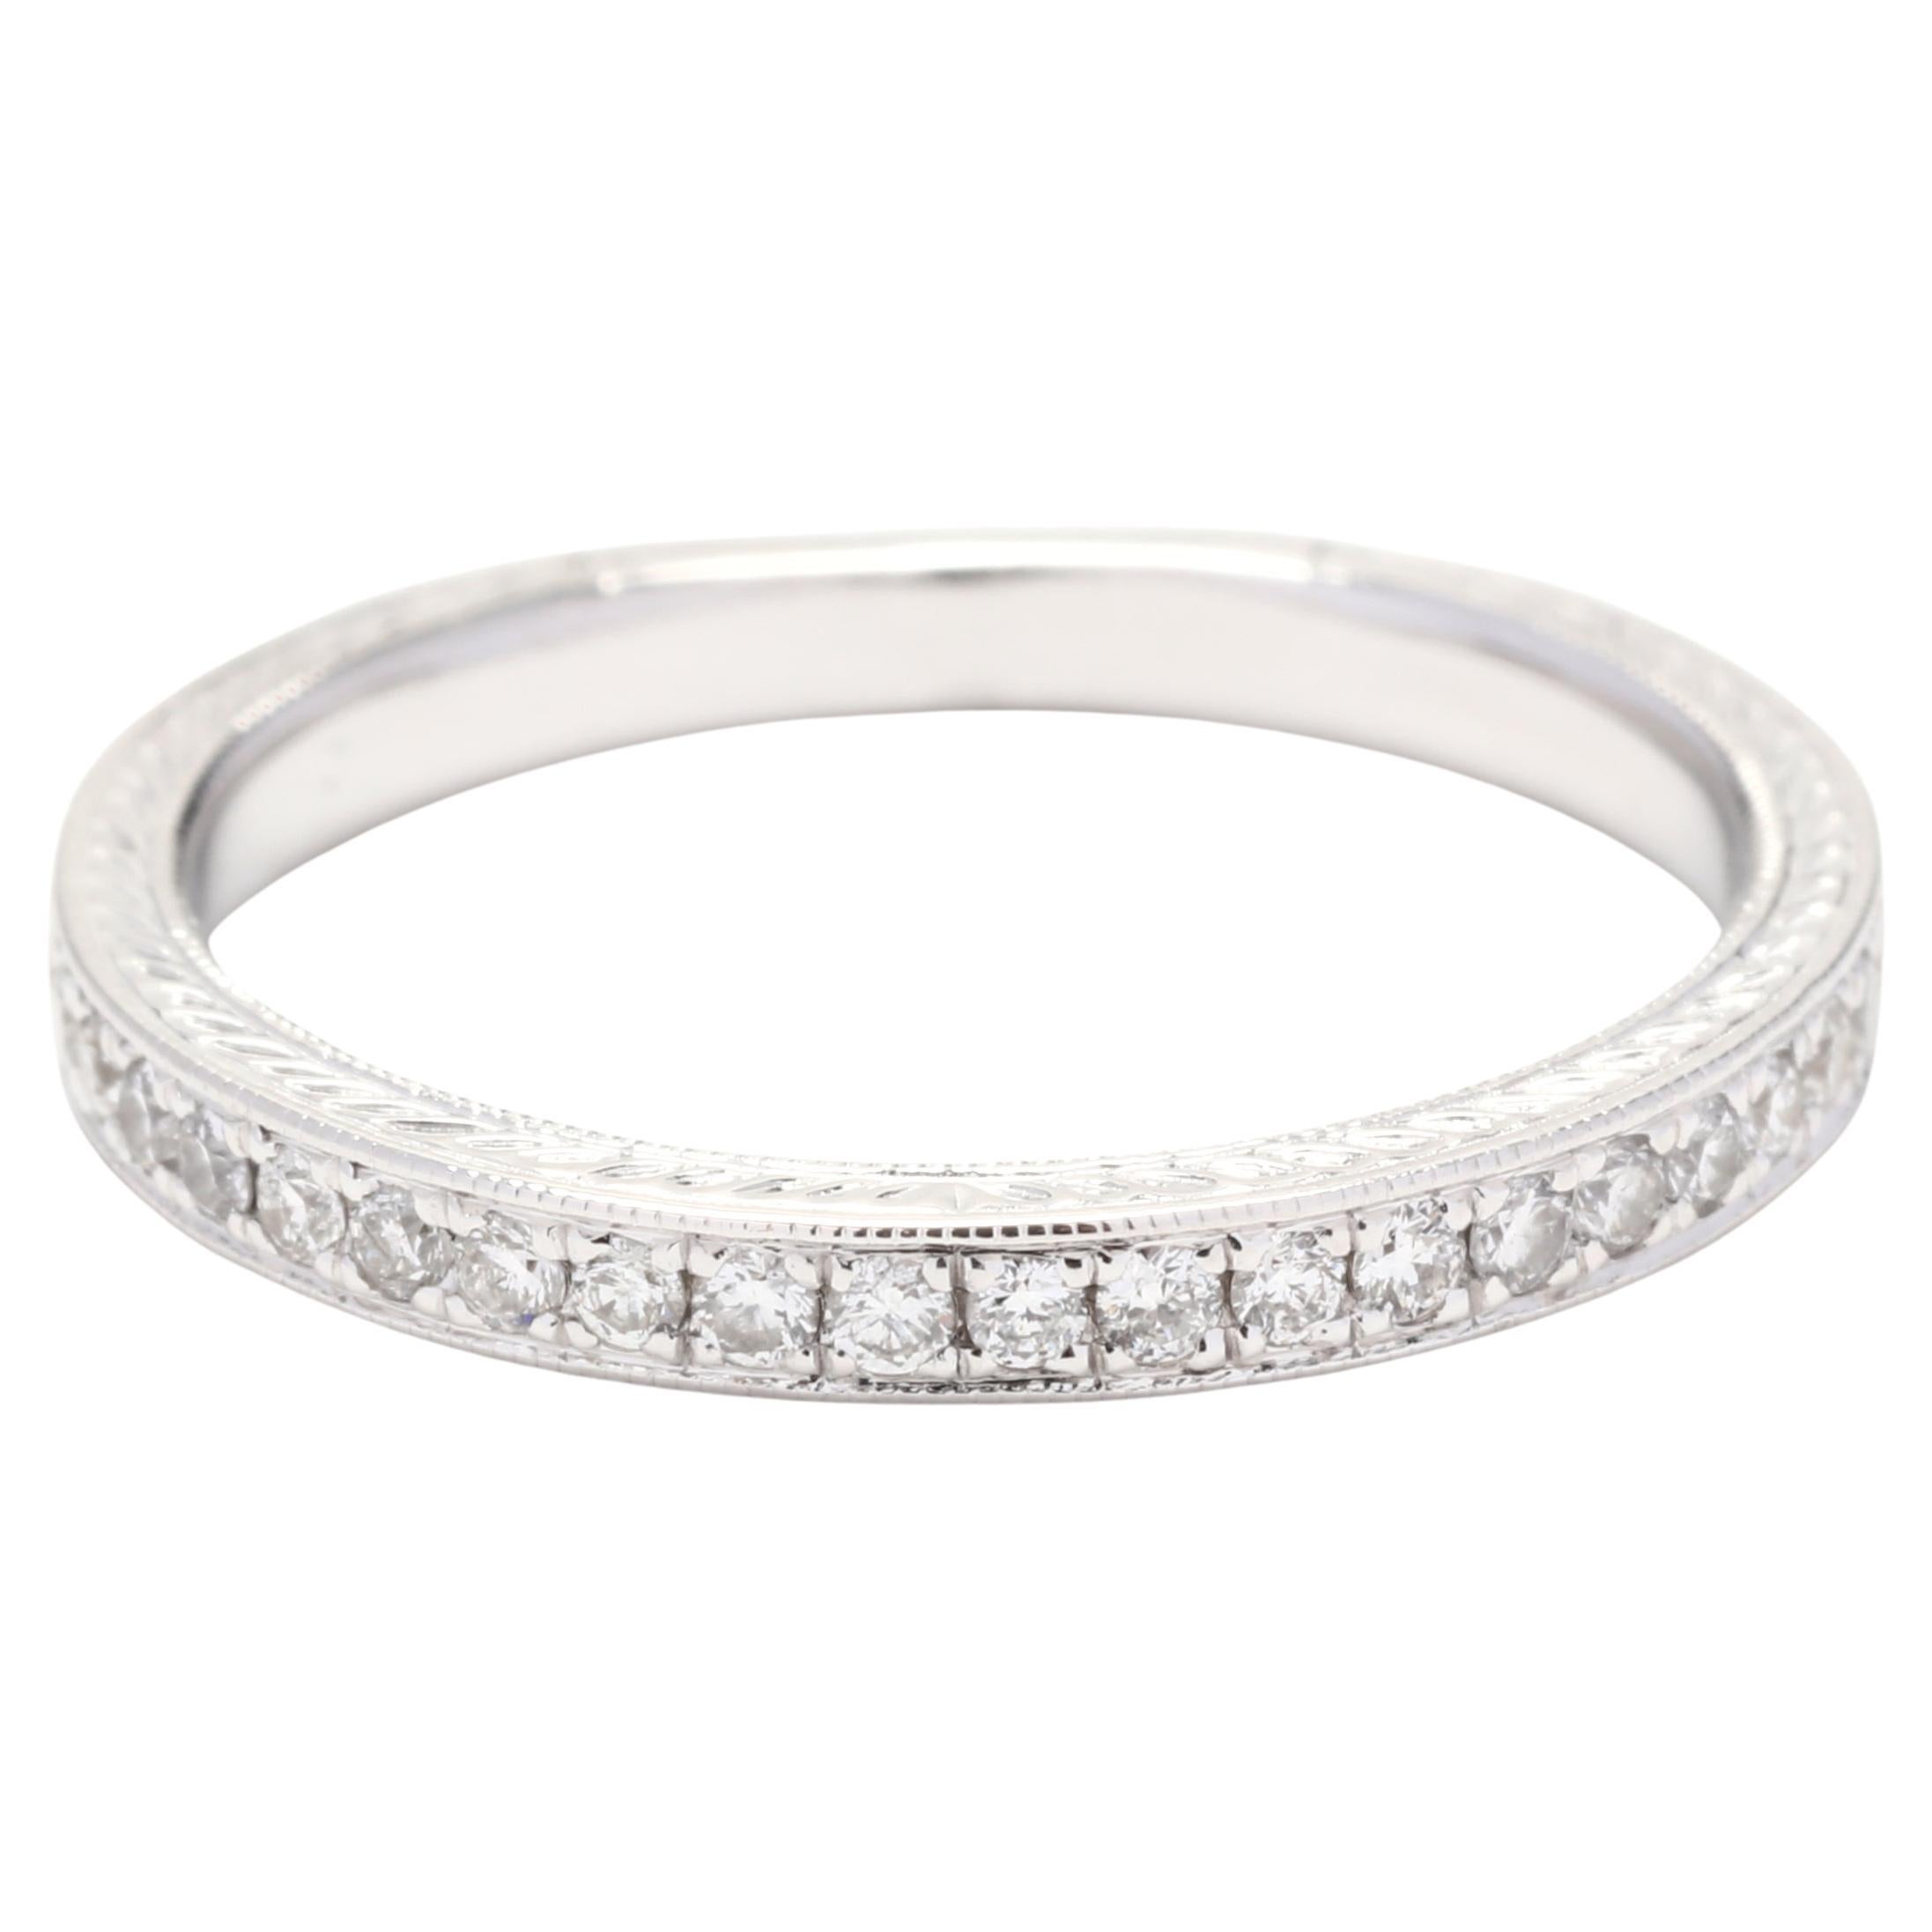 Engraved Diamond Wedding Band, 14K White Gold, Ring Size 6.25, Stackable Diamond